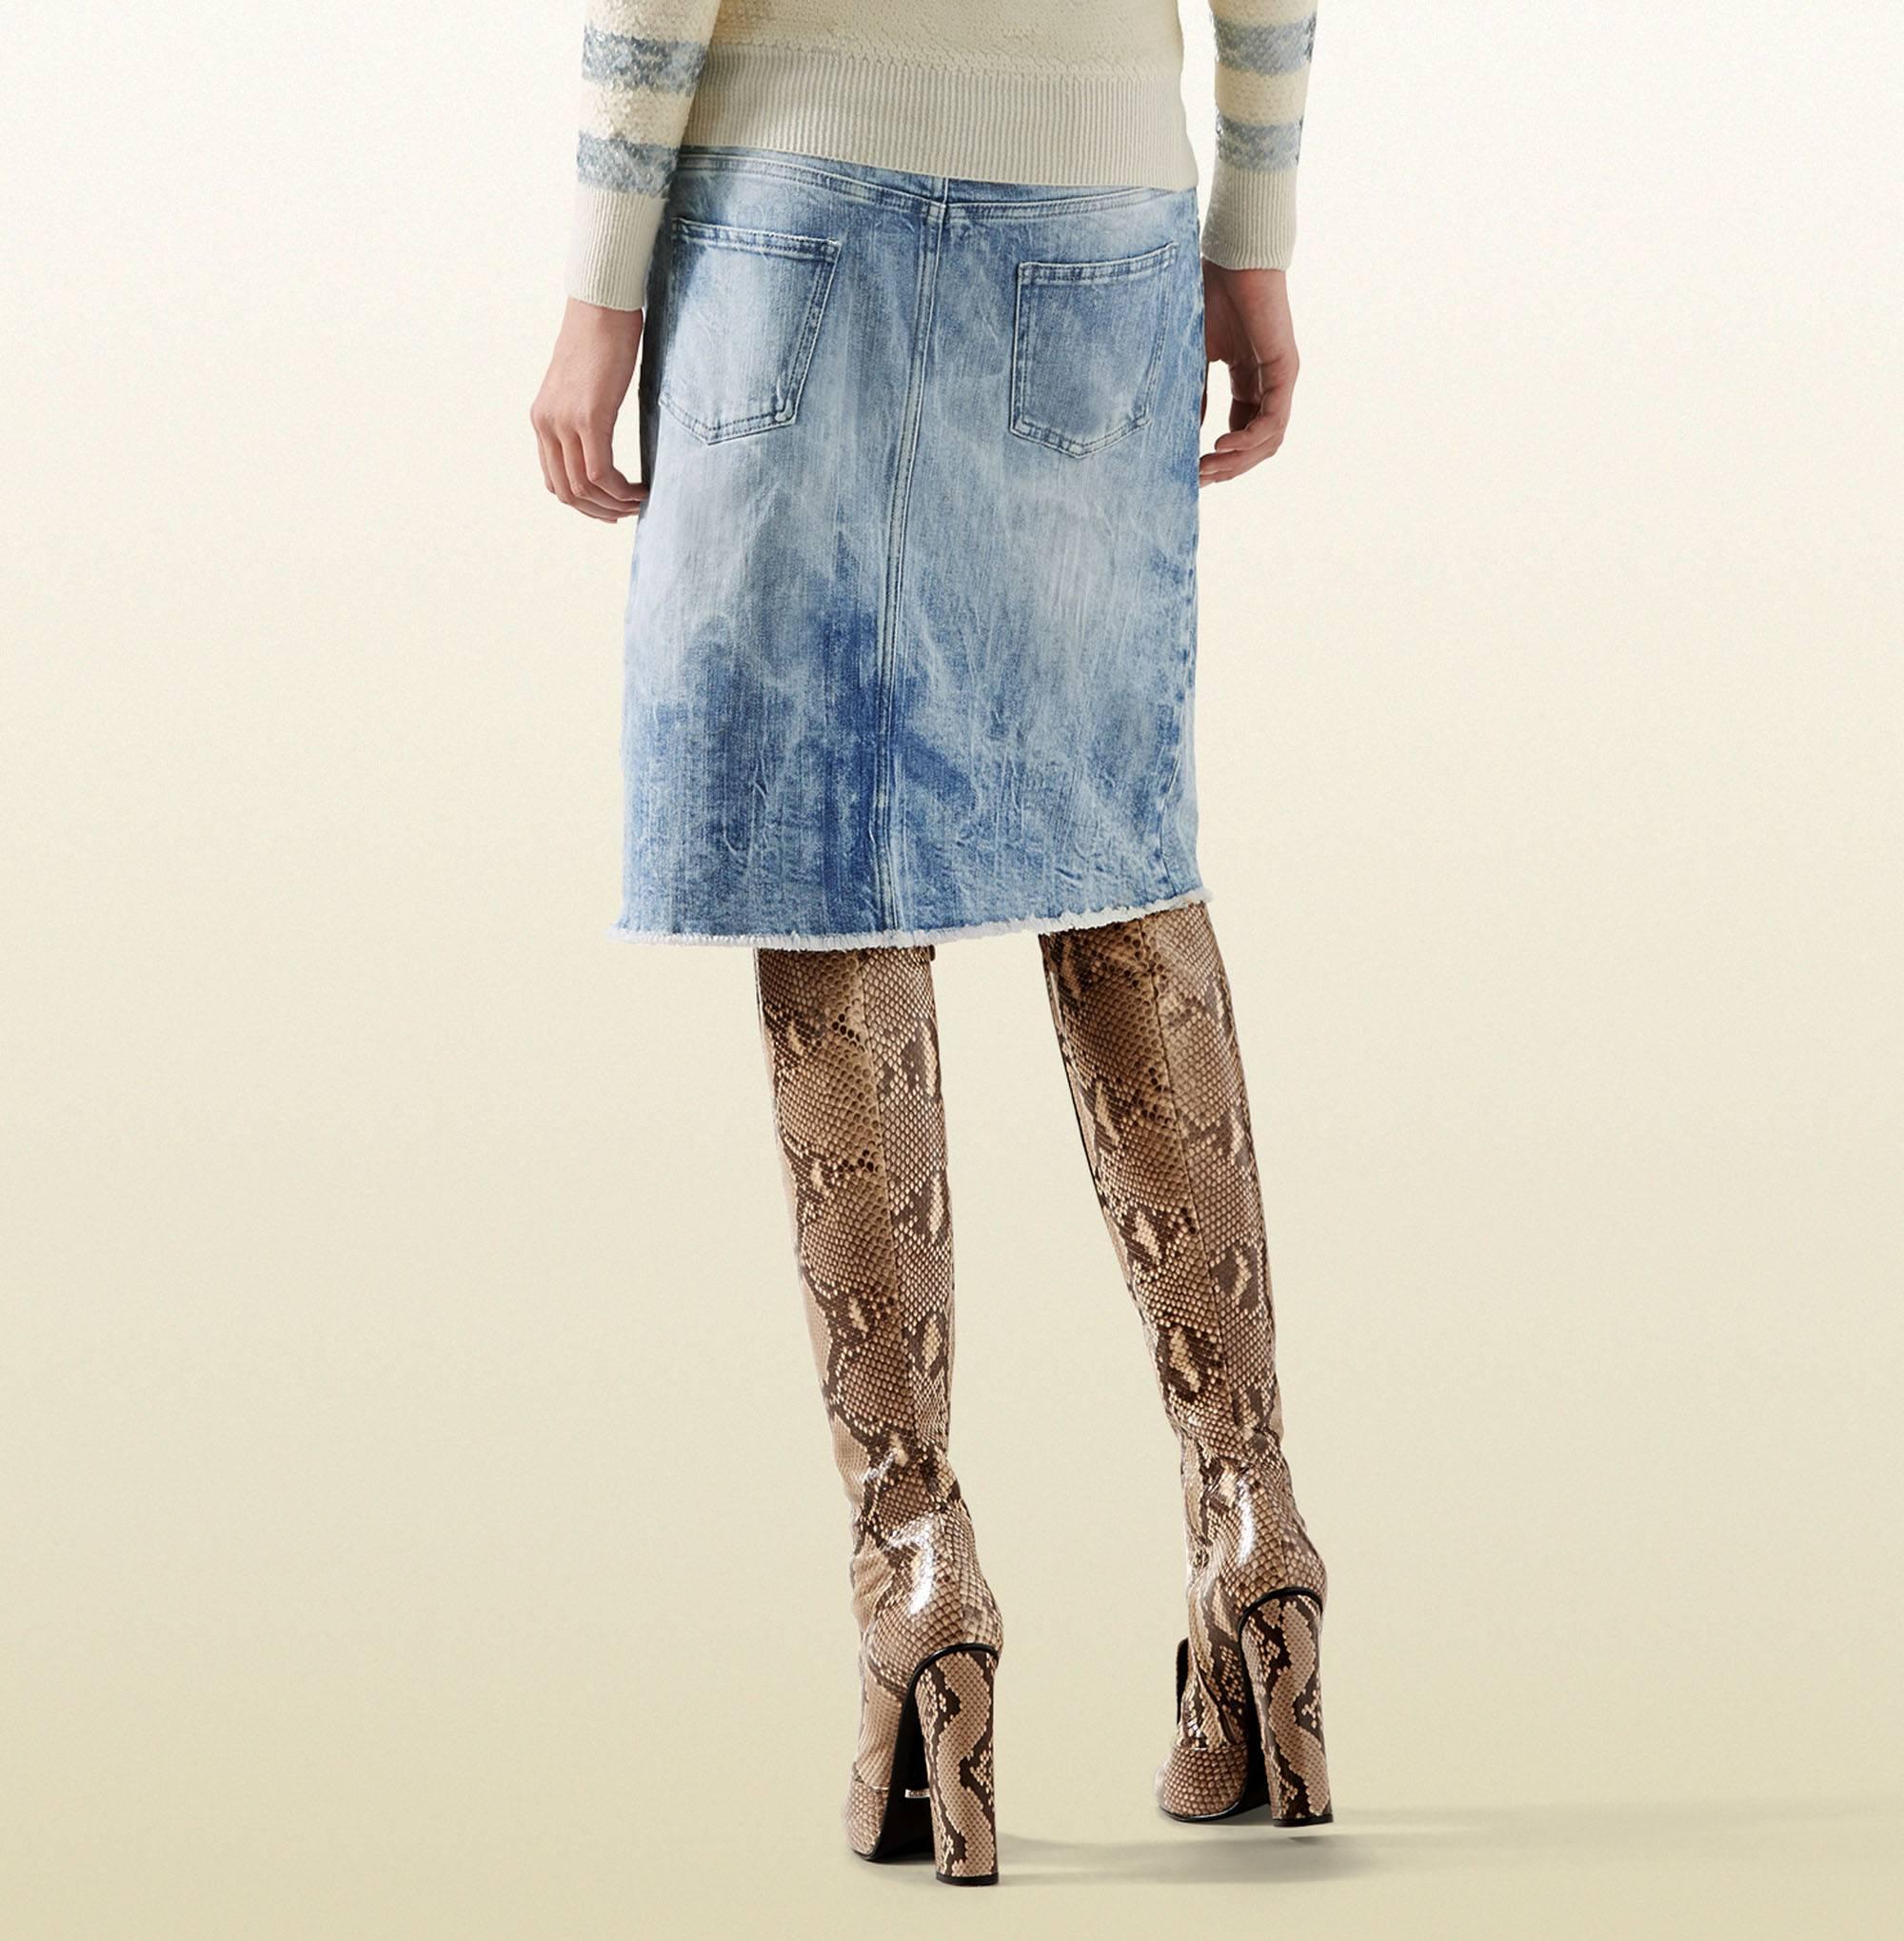 GUCCI Crystal-Embellished Stretch Denim Skirt Recreated After 1999 size 40 - 4 For Sale 1